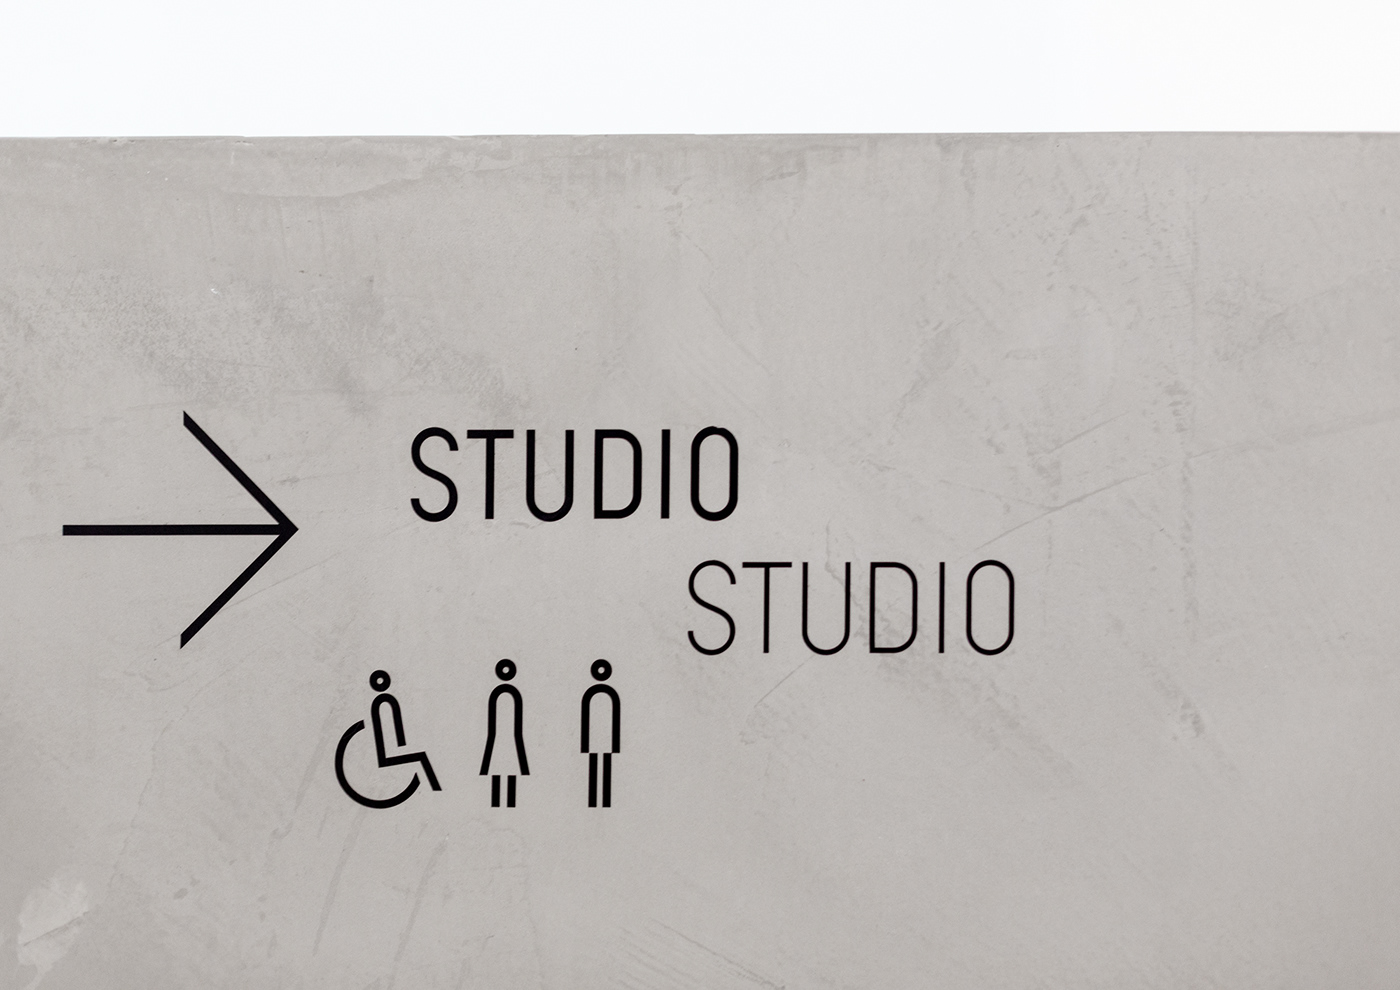 building architecture Signage wayfinding visual identity pictogram Icon design